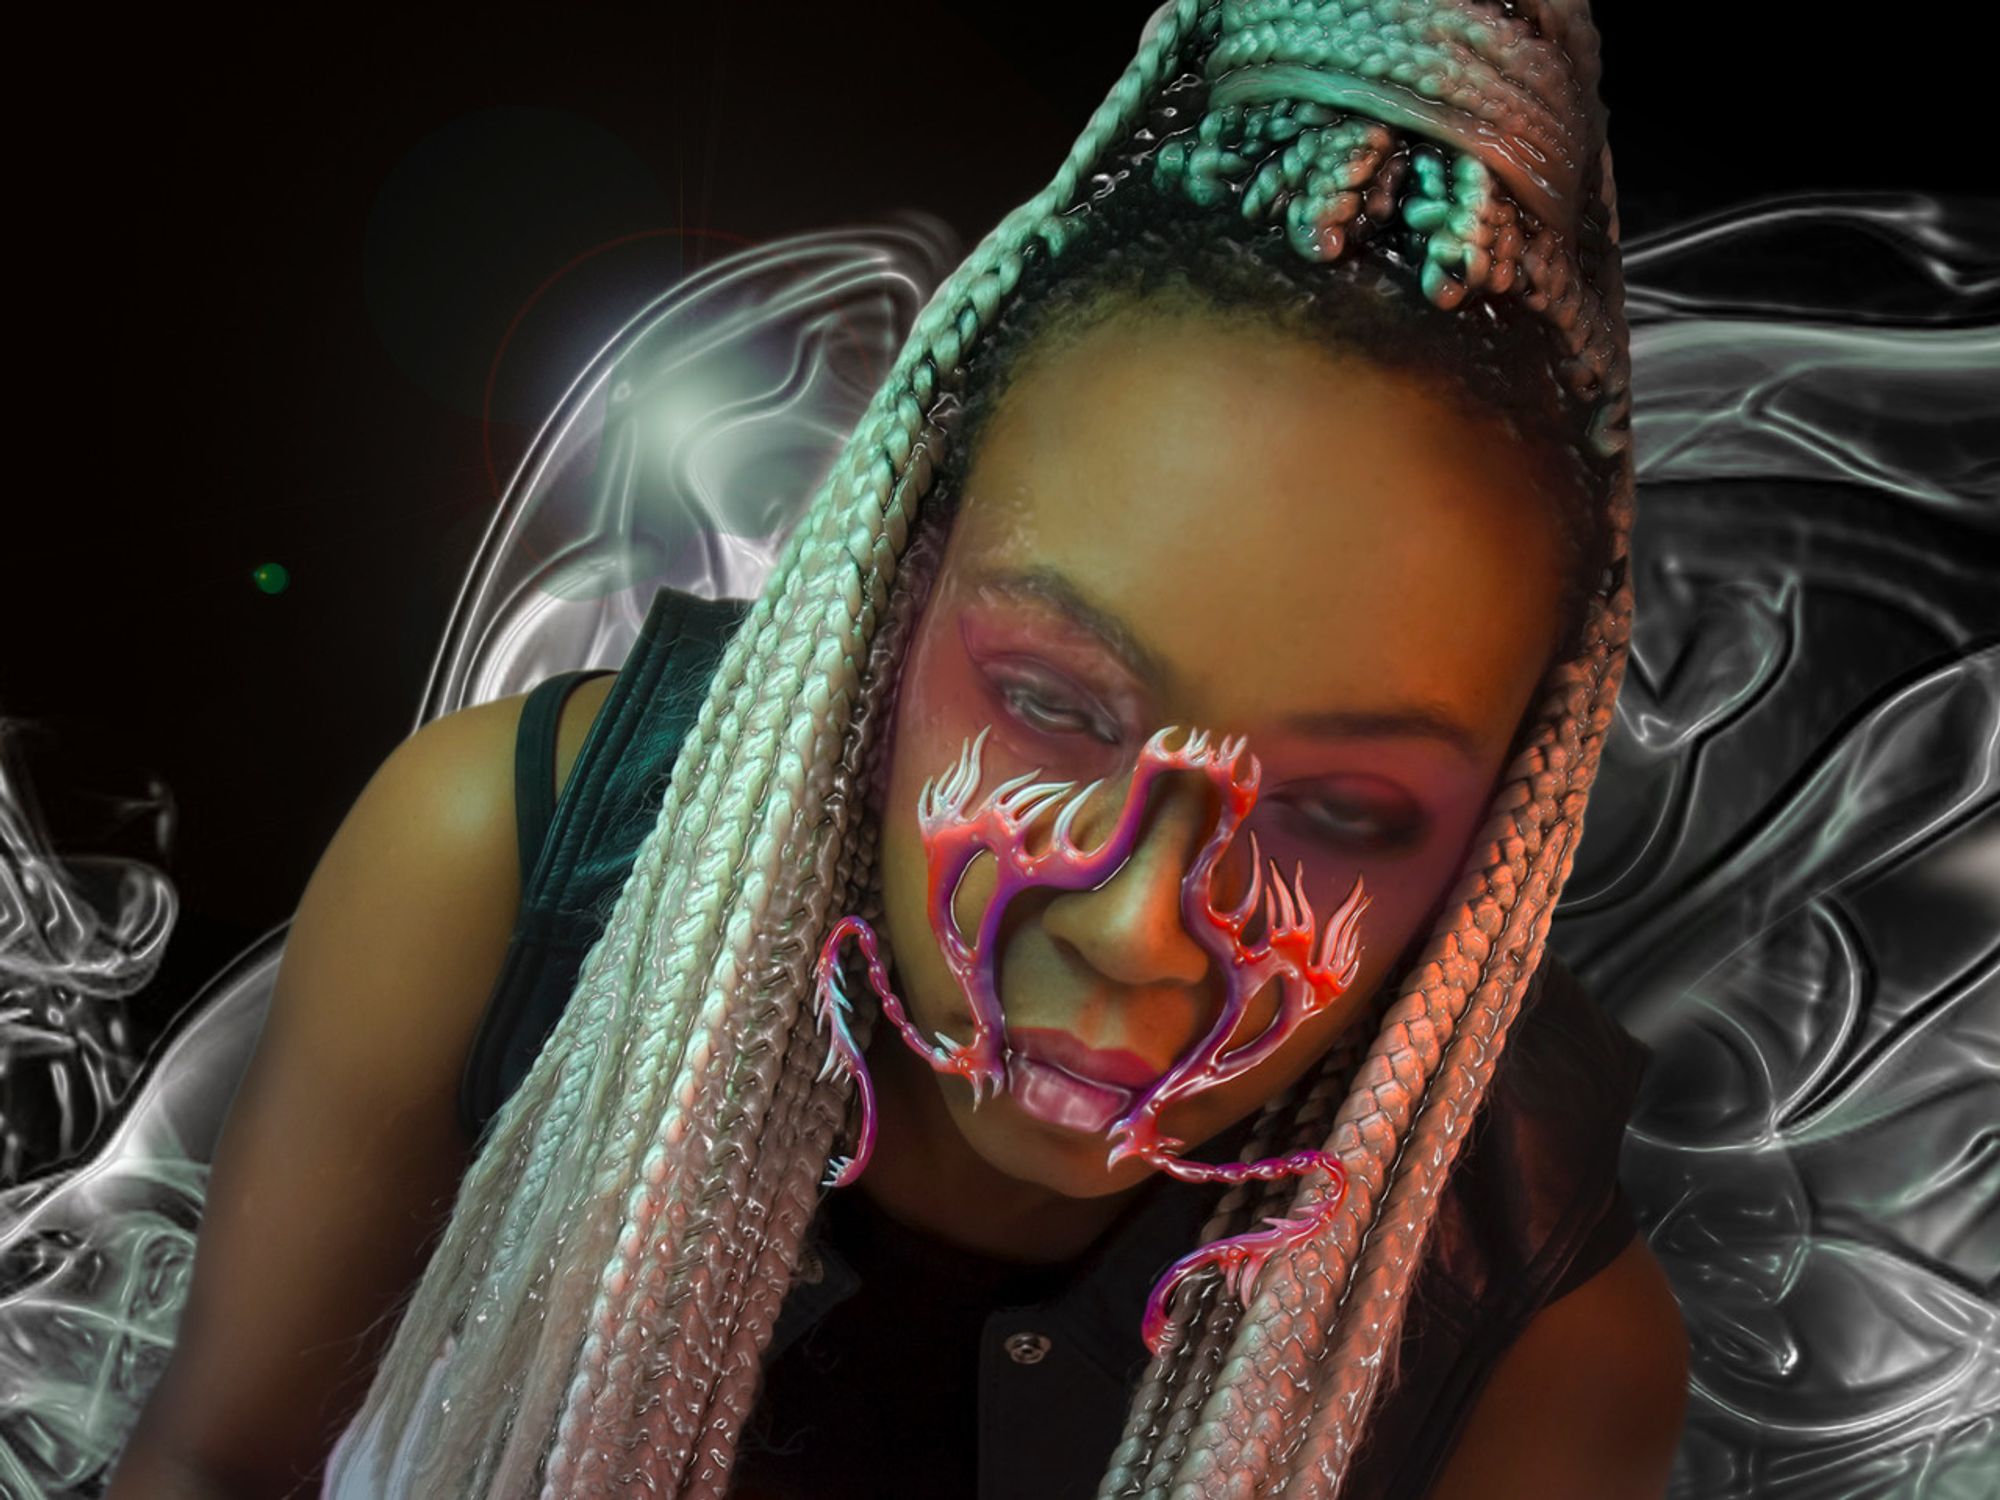 Meet GLORIA, the Newcomer UK Artist Creating Future Black Music